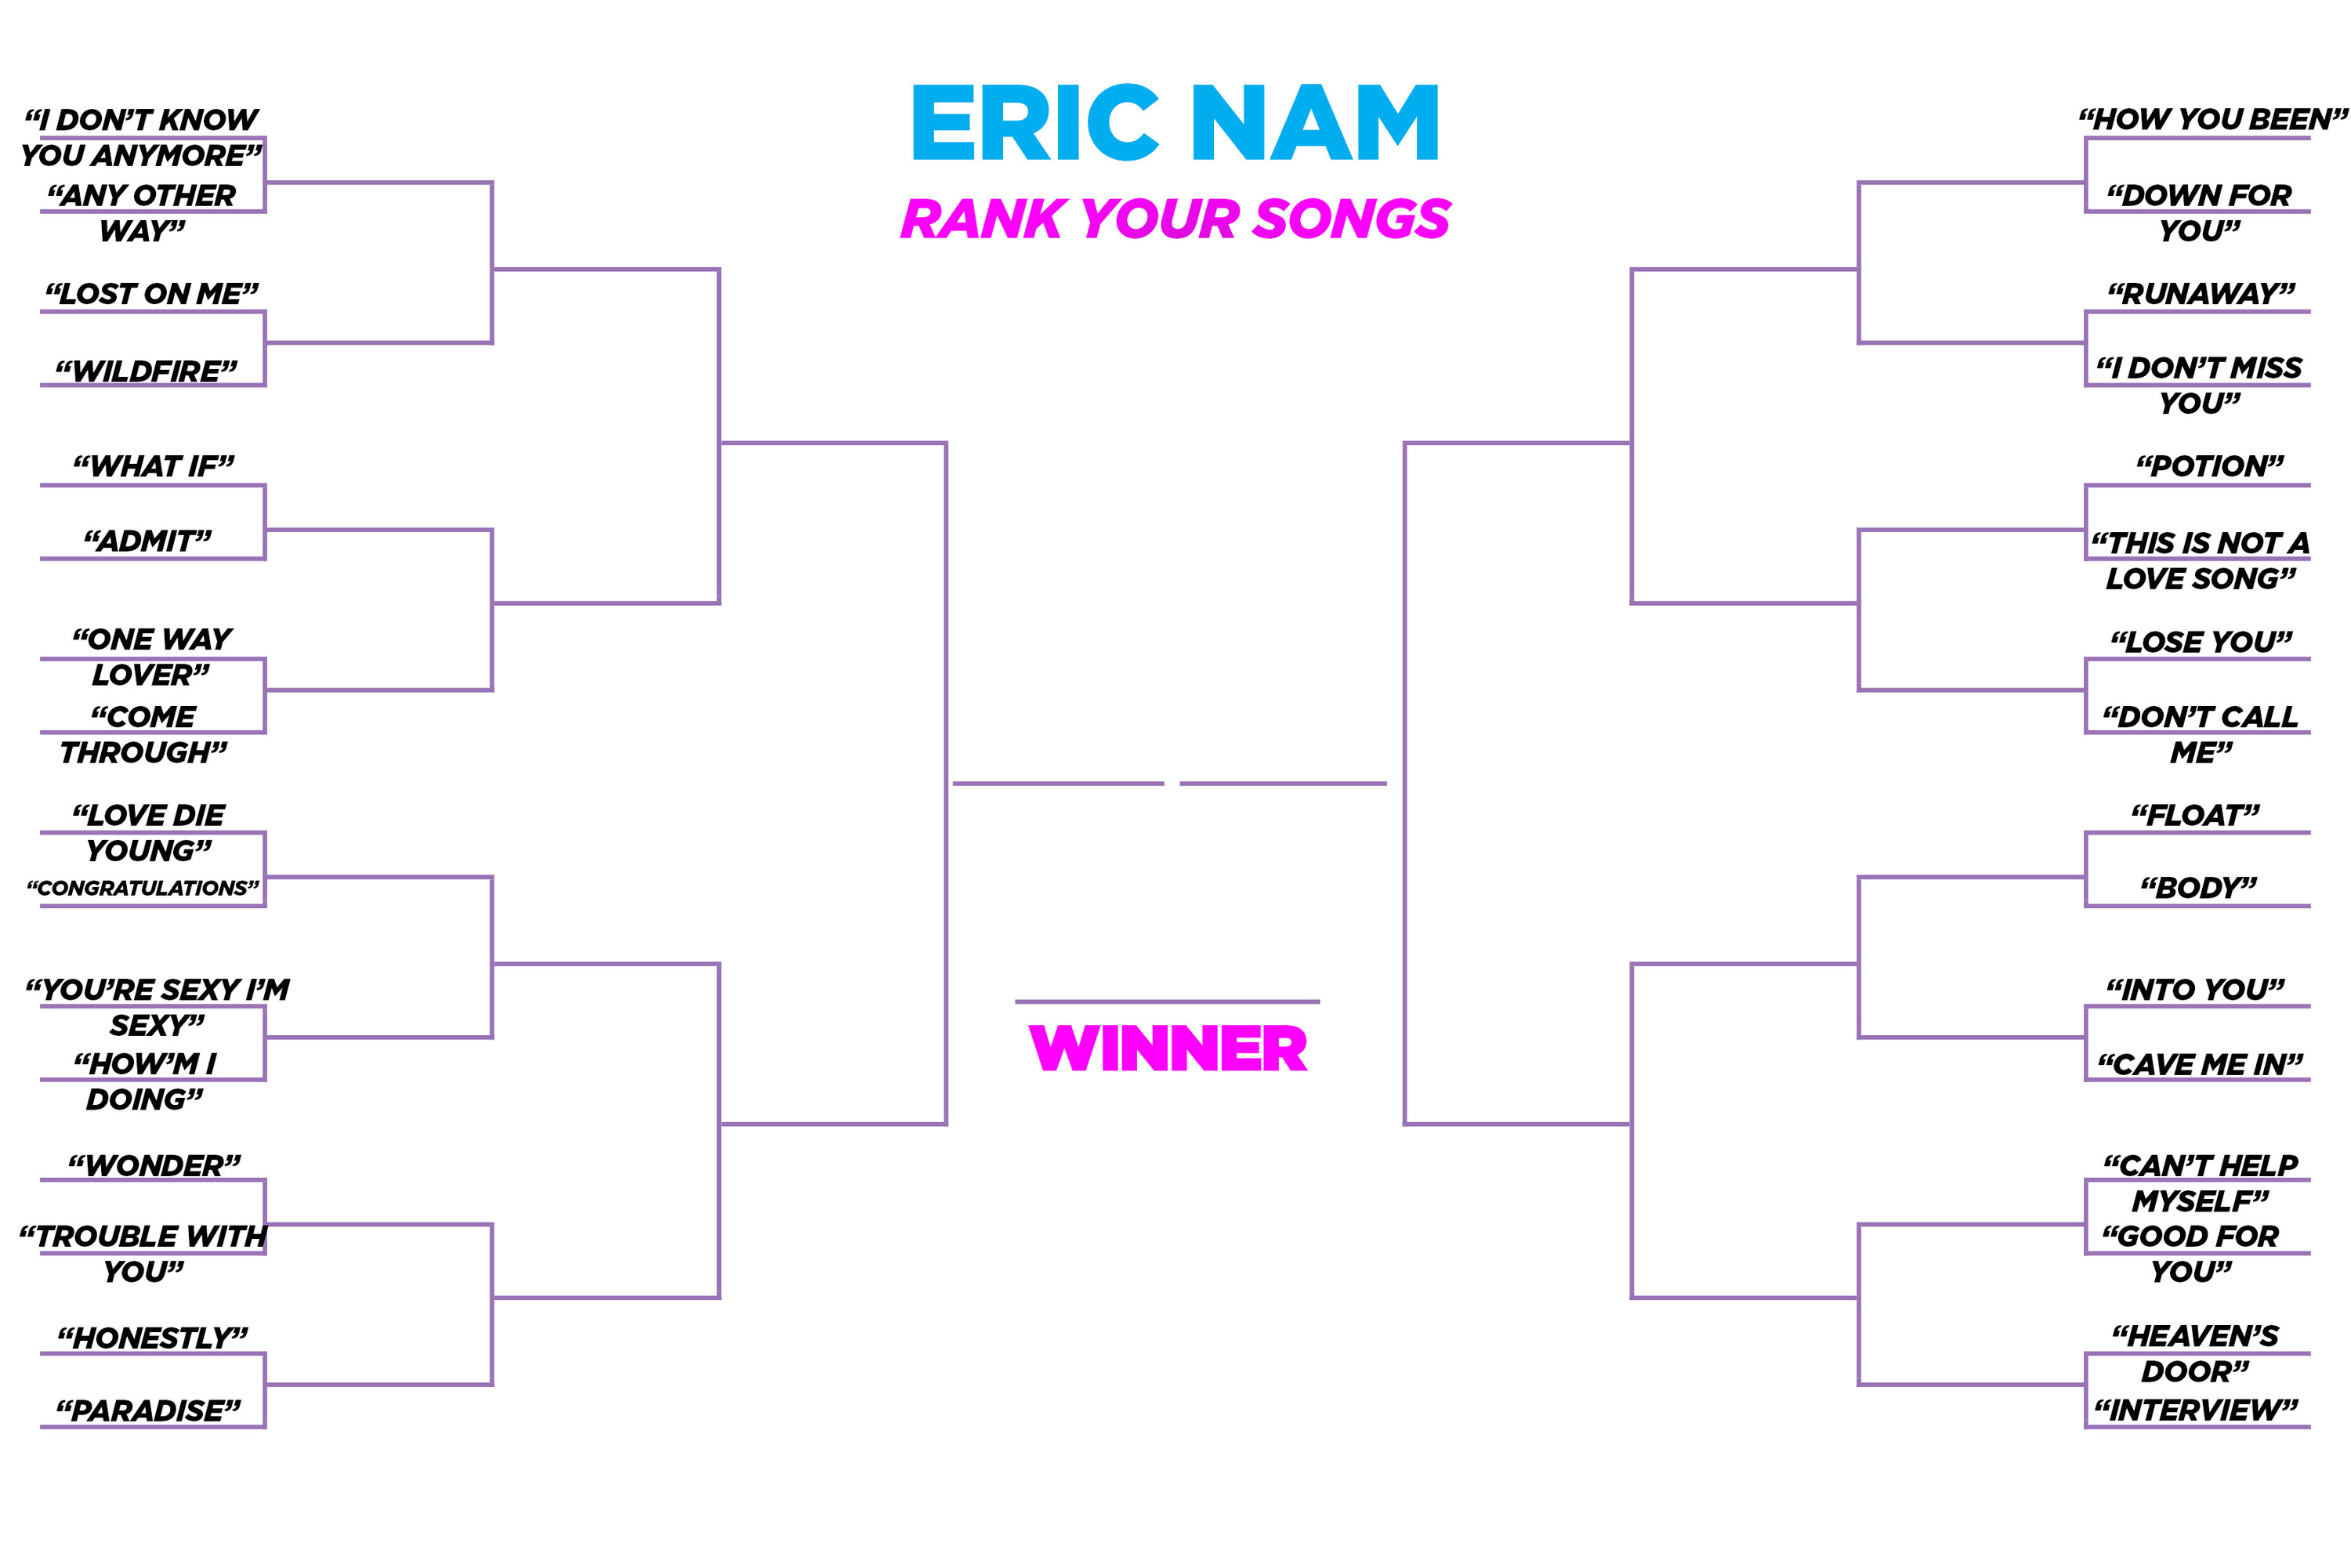 The Eric Nam bracket